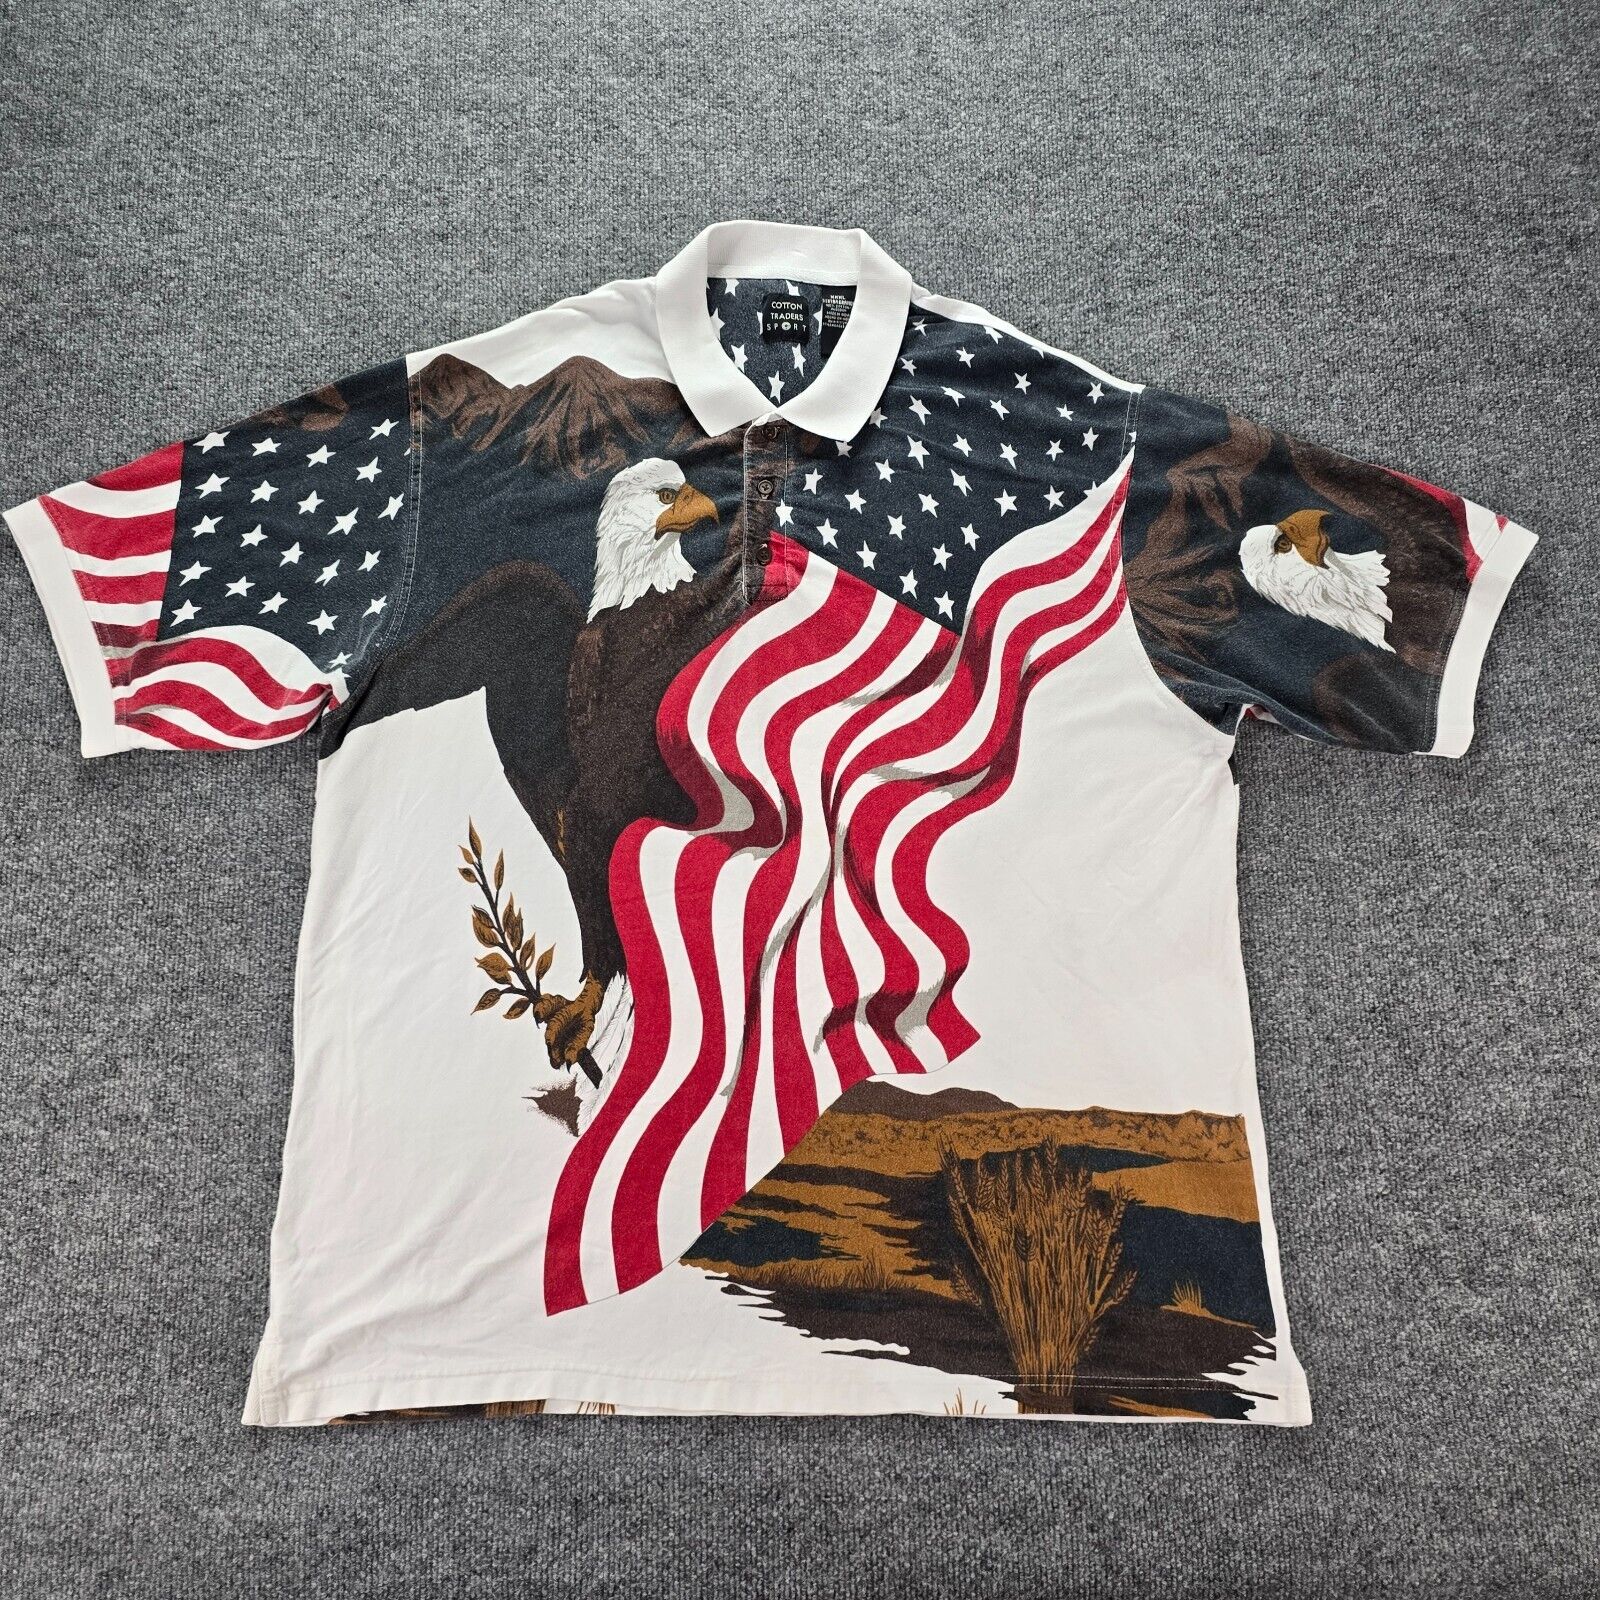 Cotton Traders Mens Polo Shirt American Eagle USA Flag Patriotic Sz 2XL